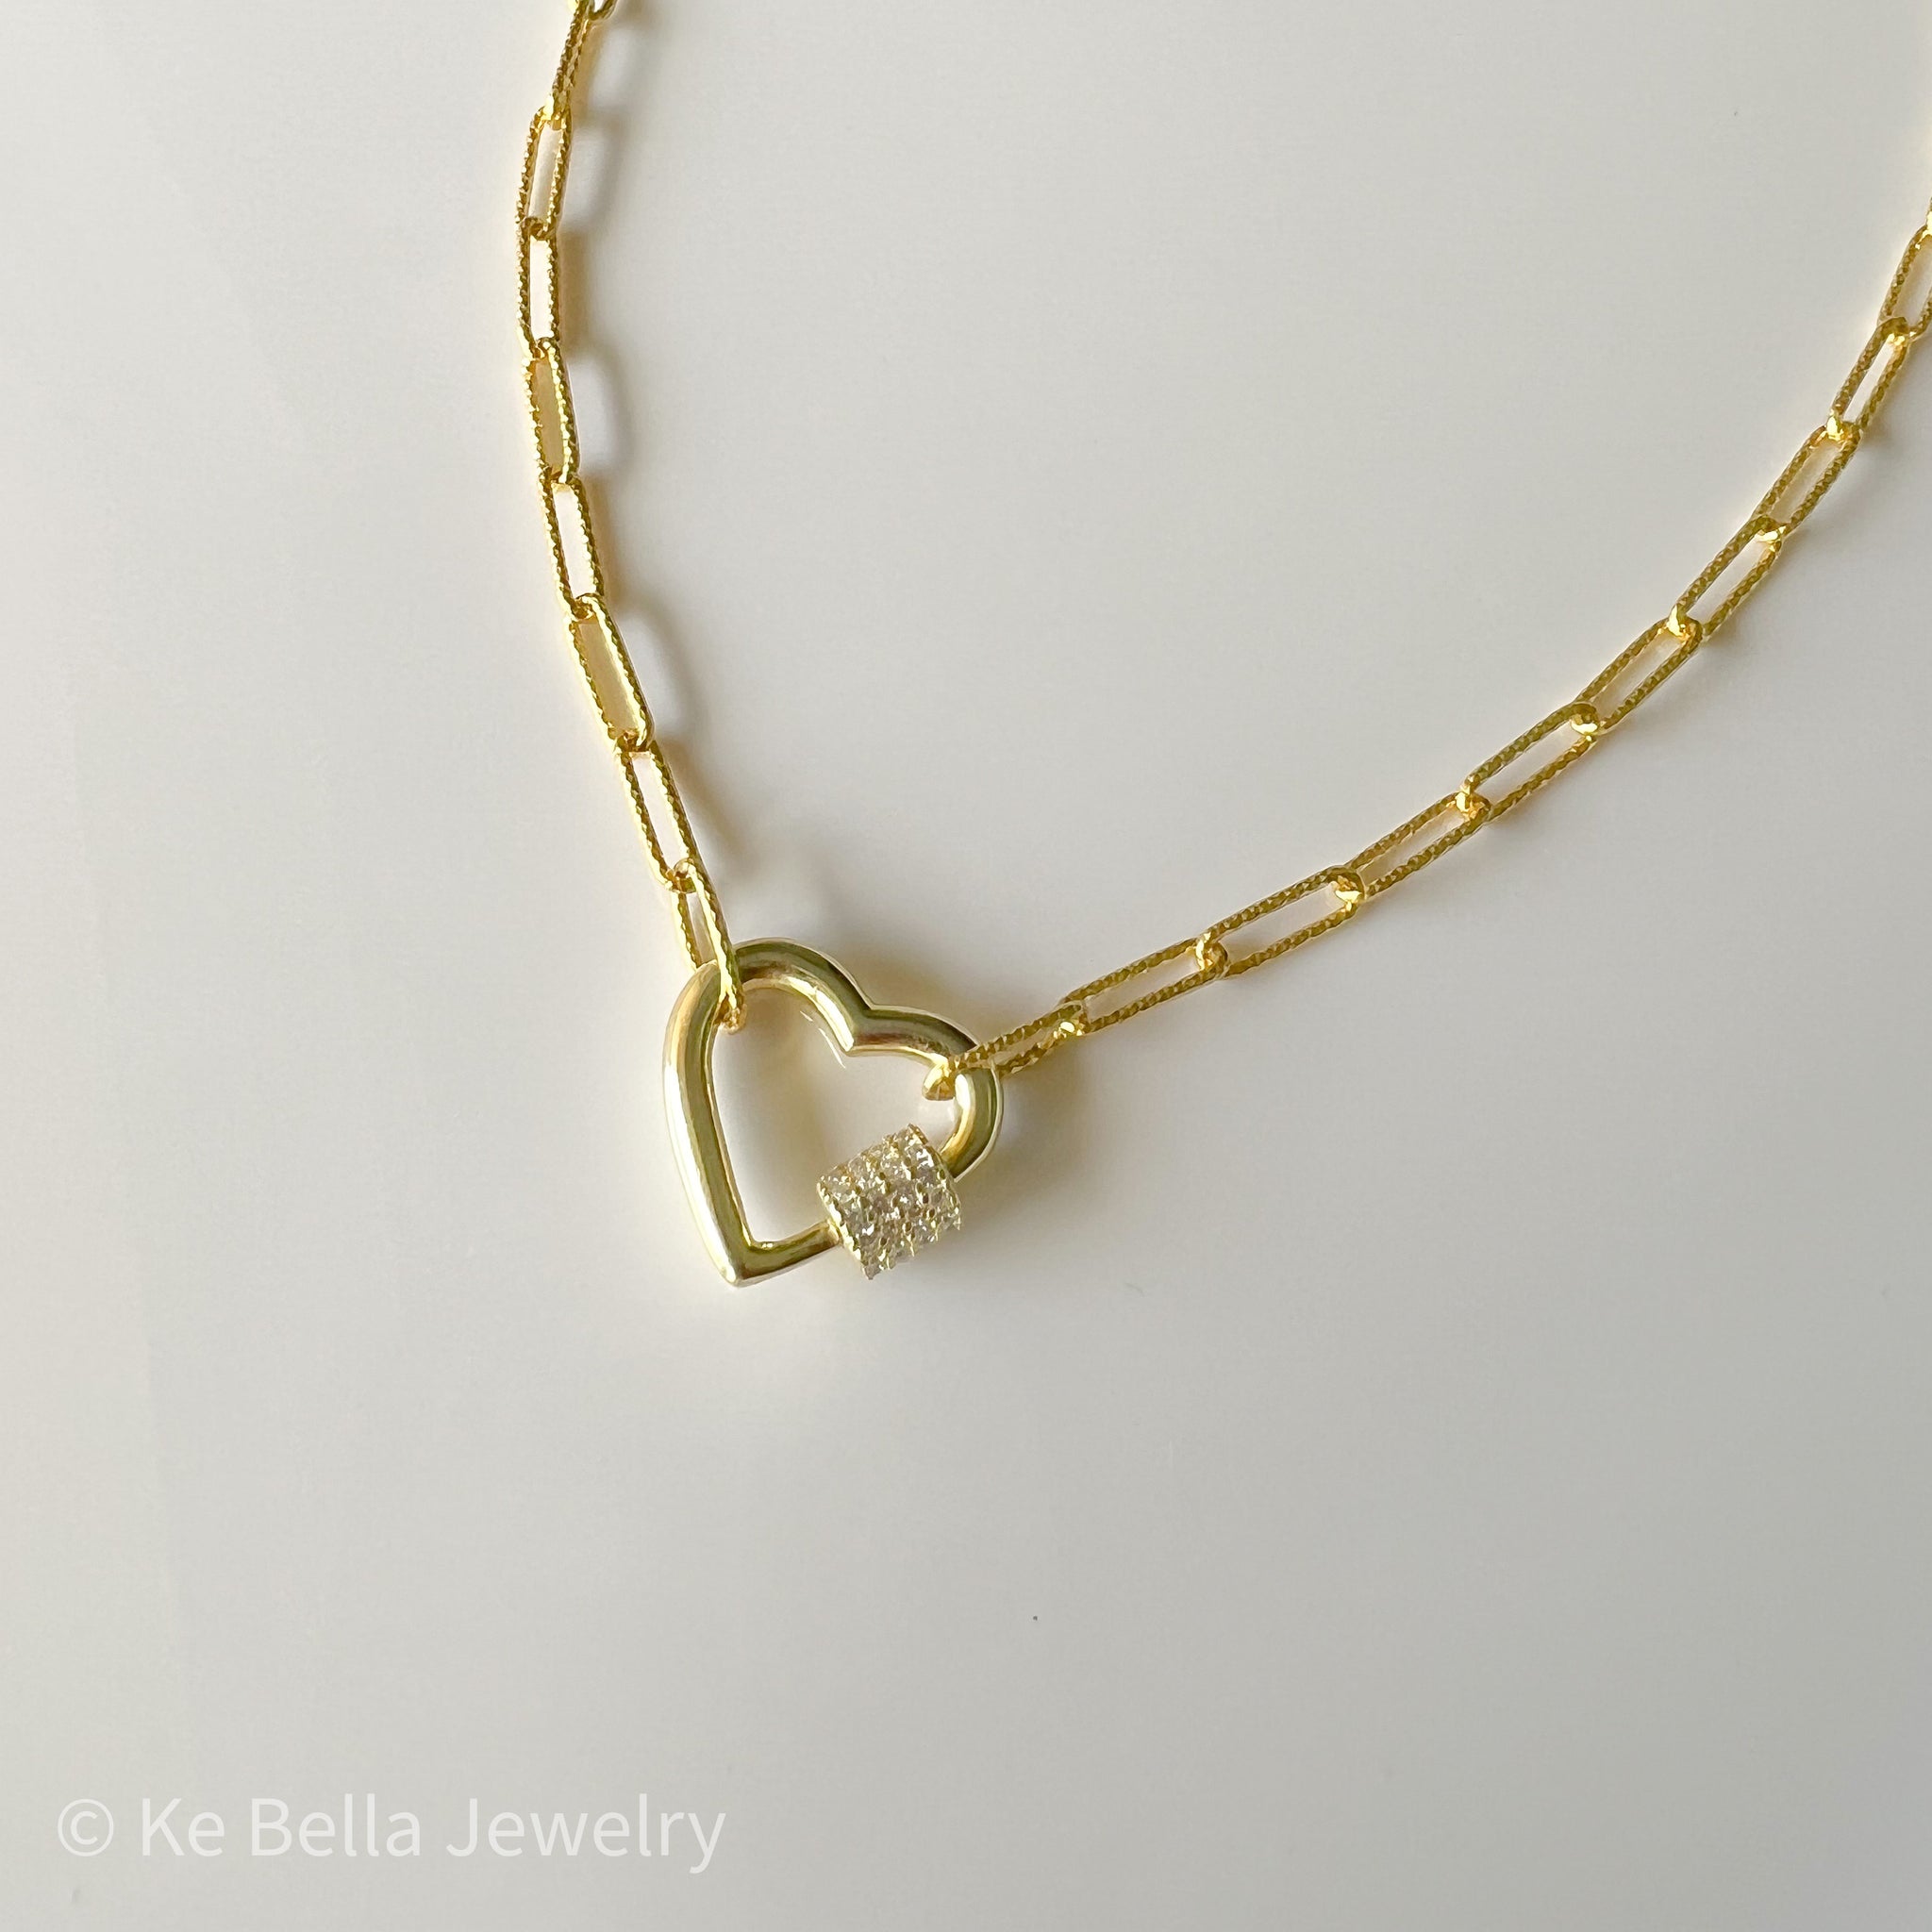 Heart Padlock Pendant Necklace in 18k Gold Vermeil